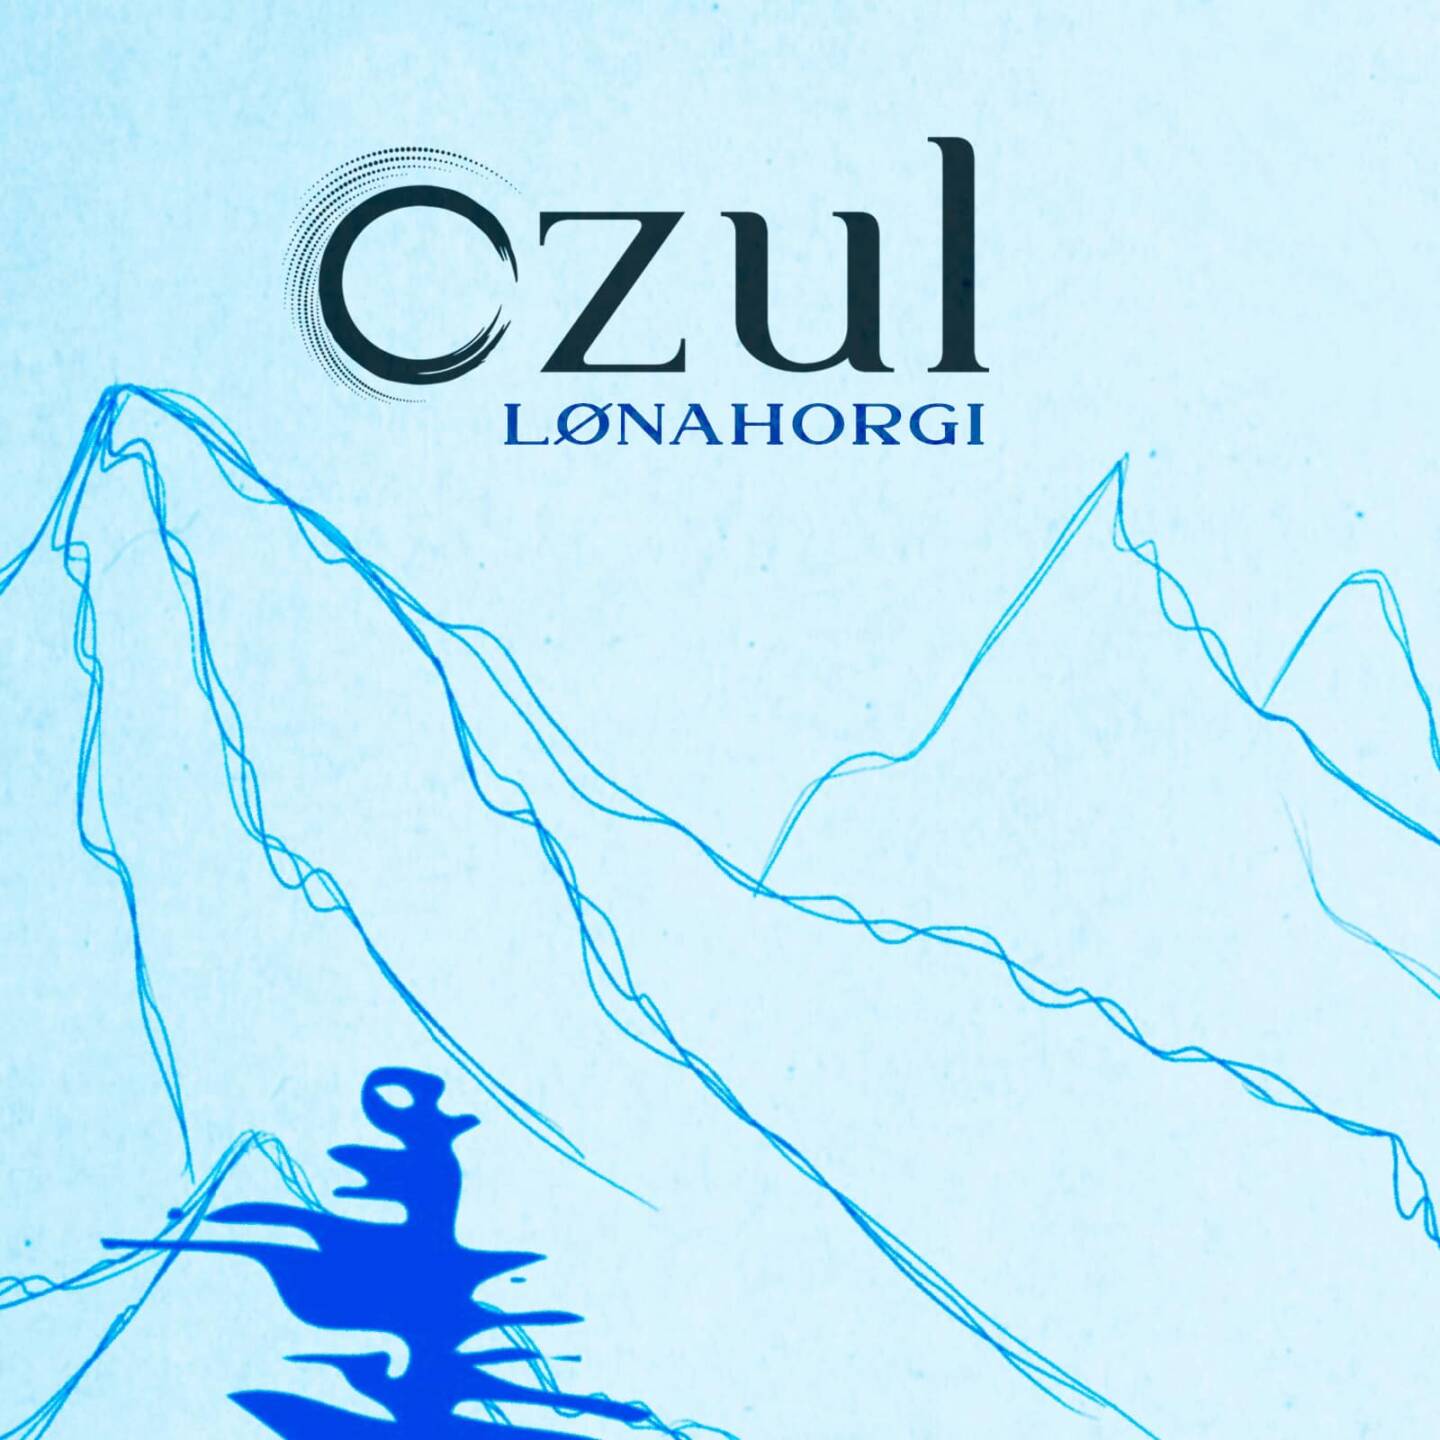 Norwegian prog project Ozul presents video for third single Lønahorgi